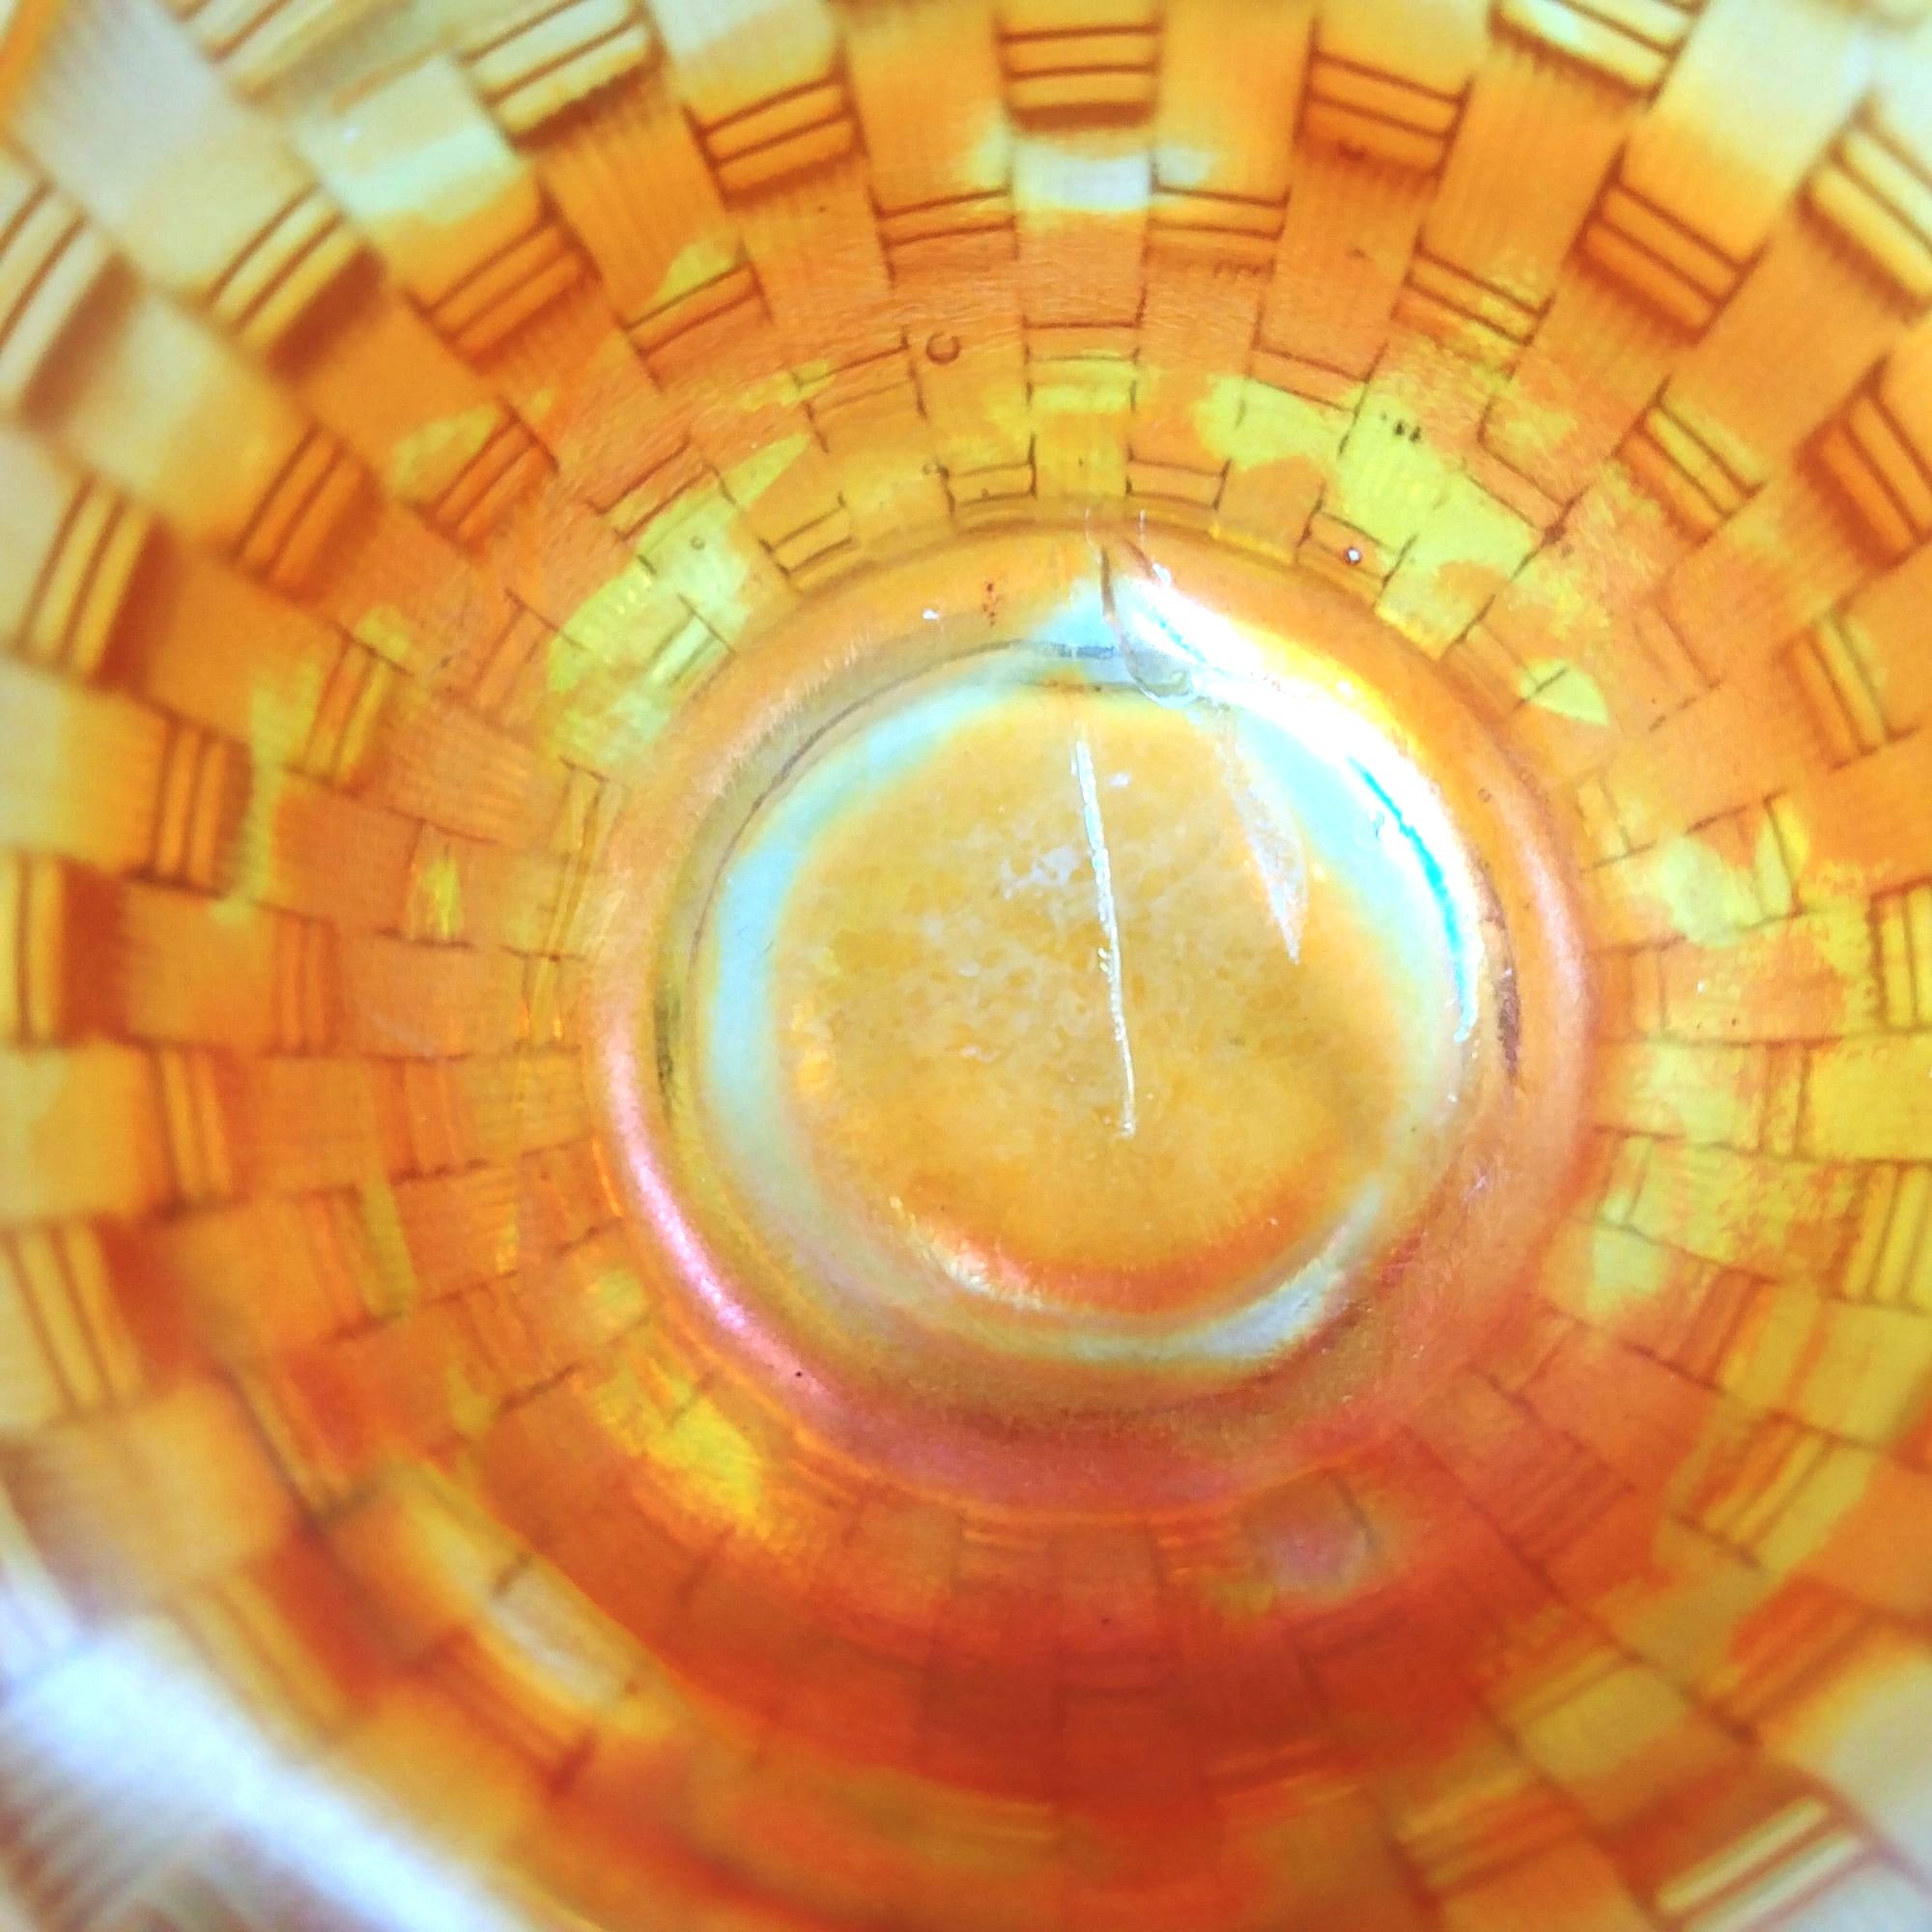 Carnival Glass Marigold Basket Weave Dish Ruffled Open Lattice Edge